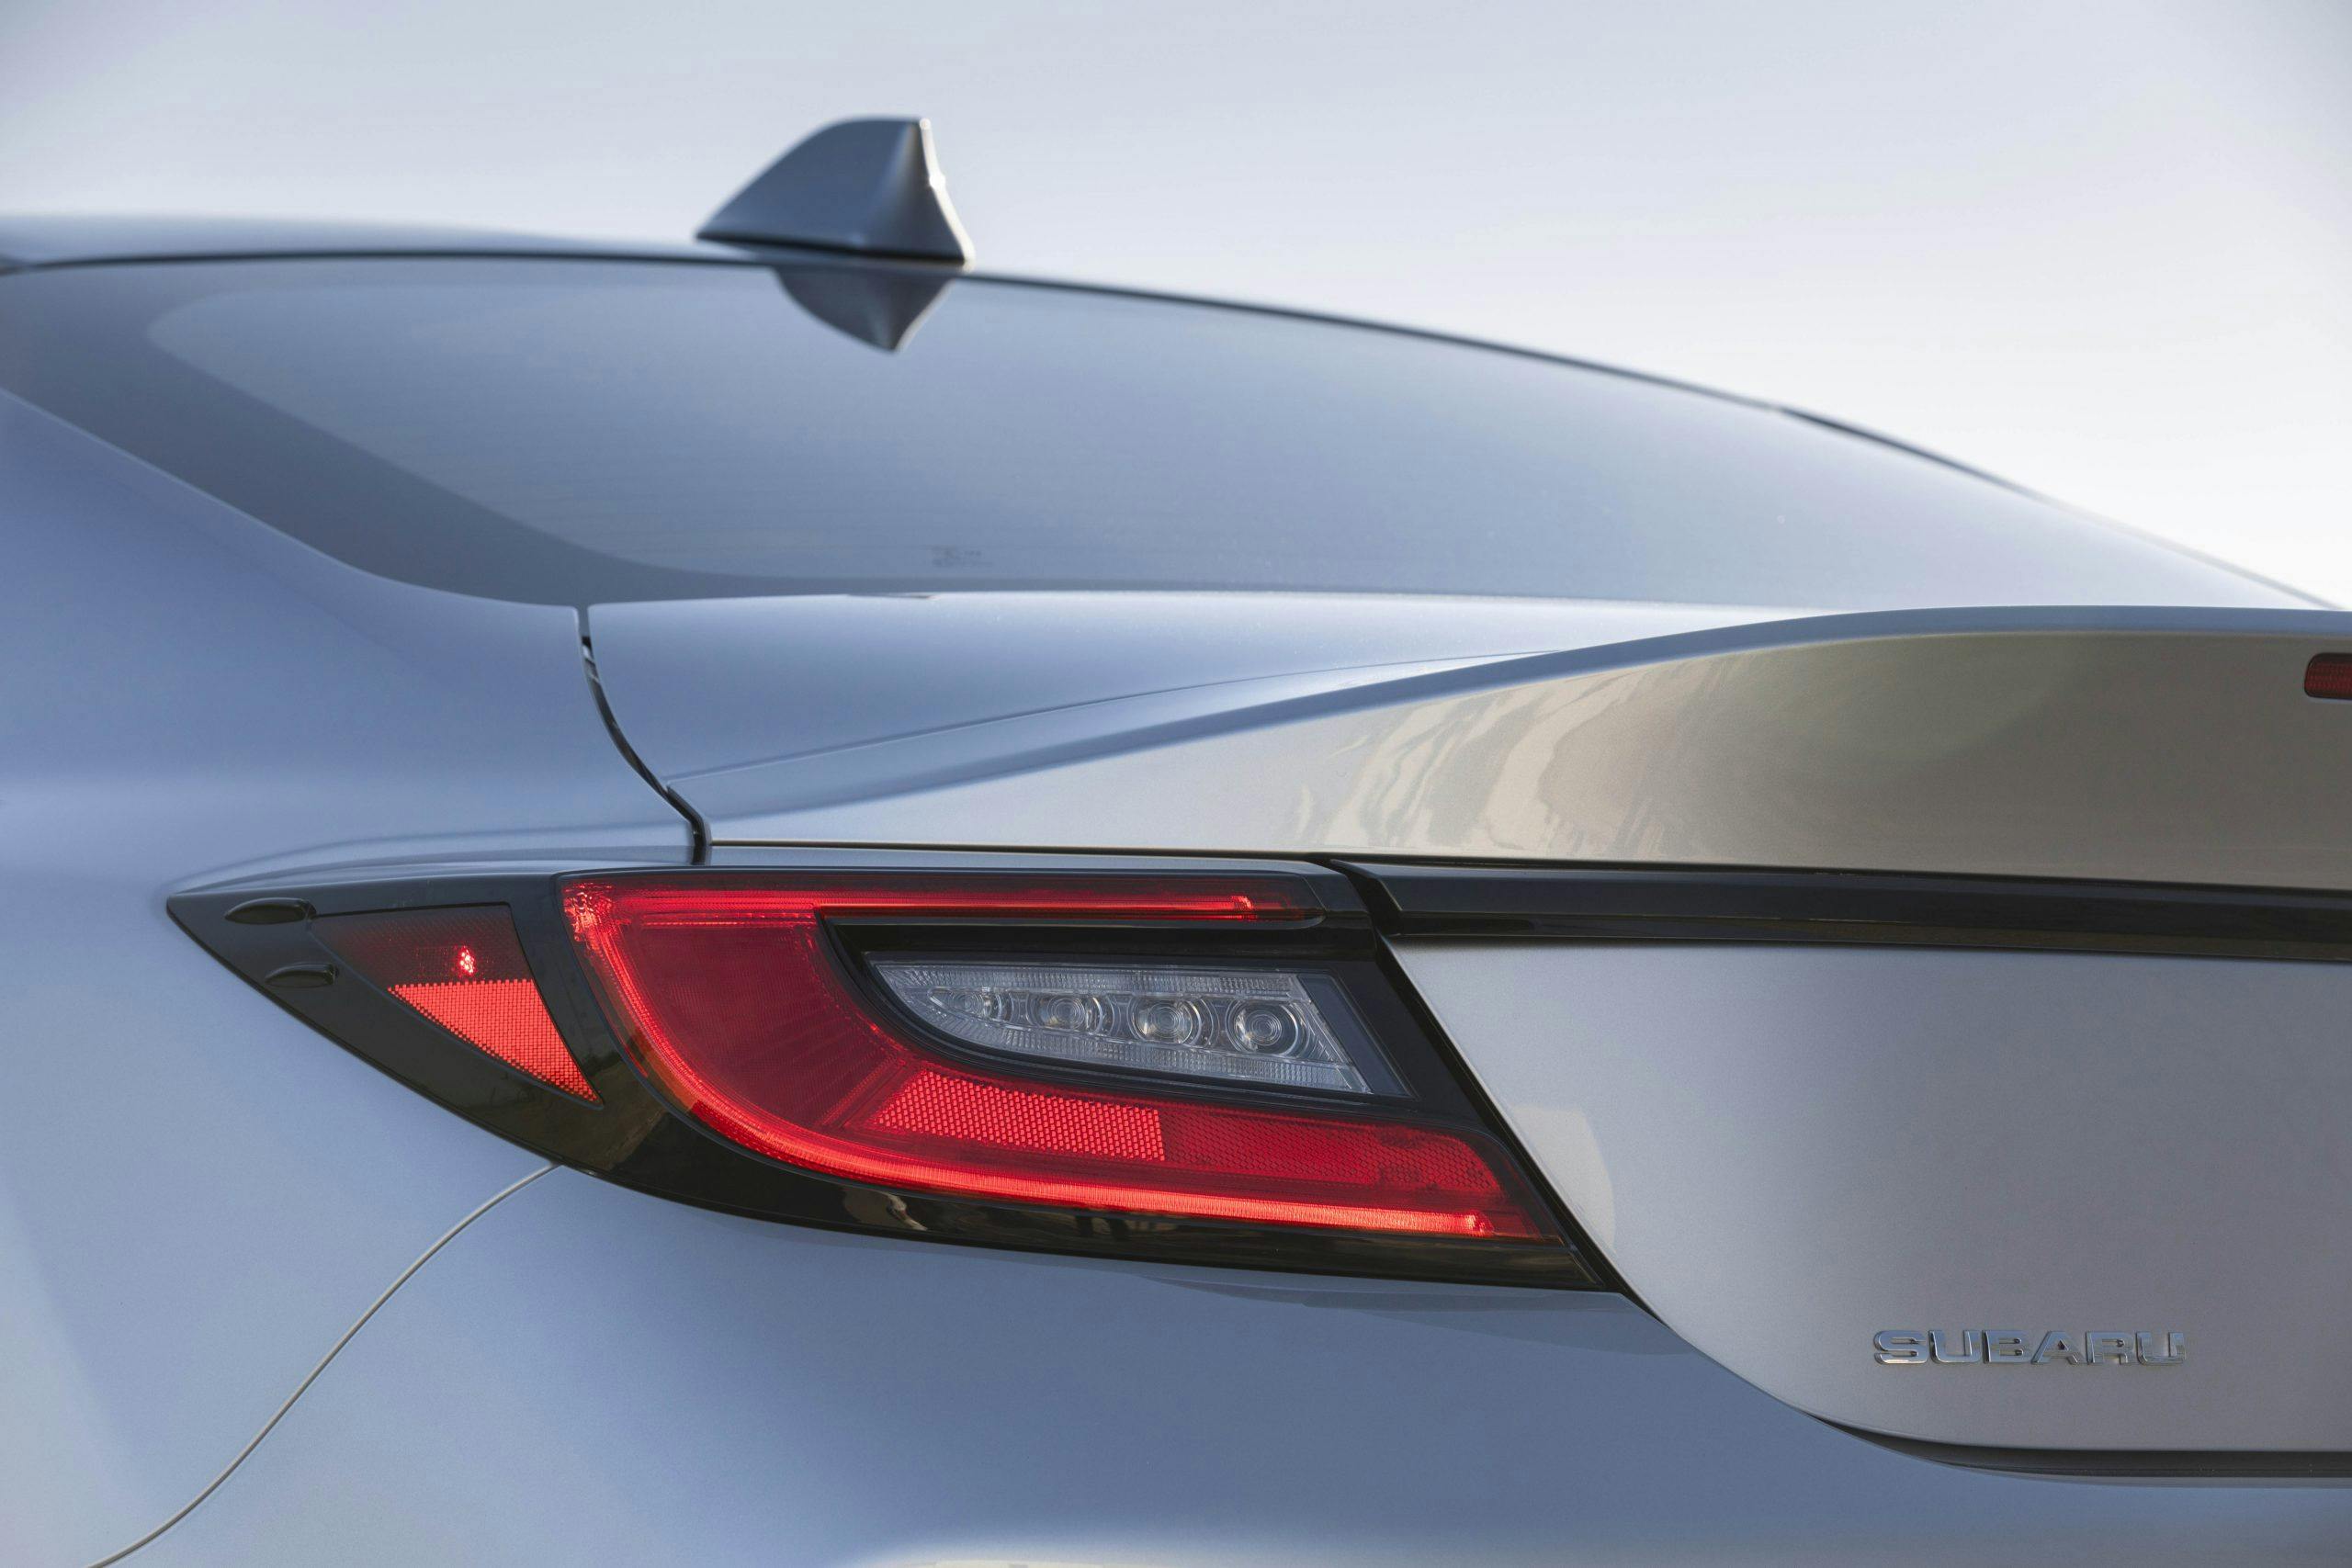 New 2022 Subaru BRZ taillight detail